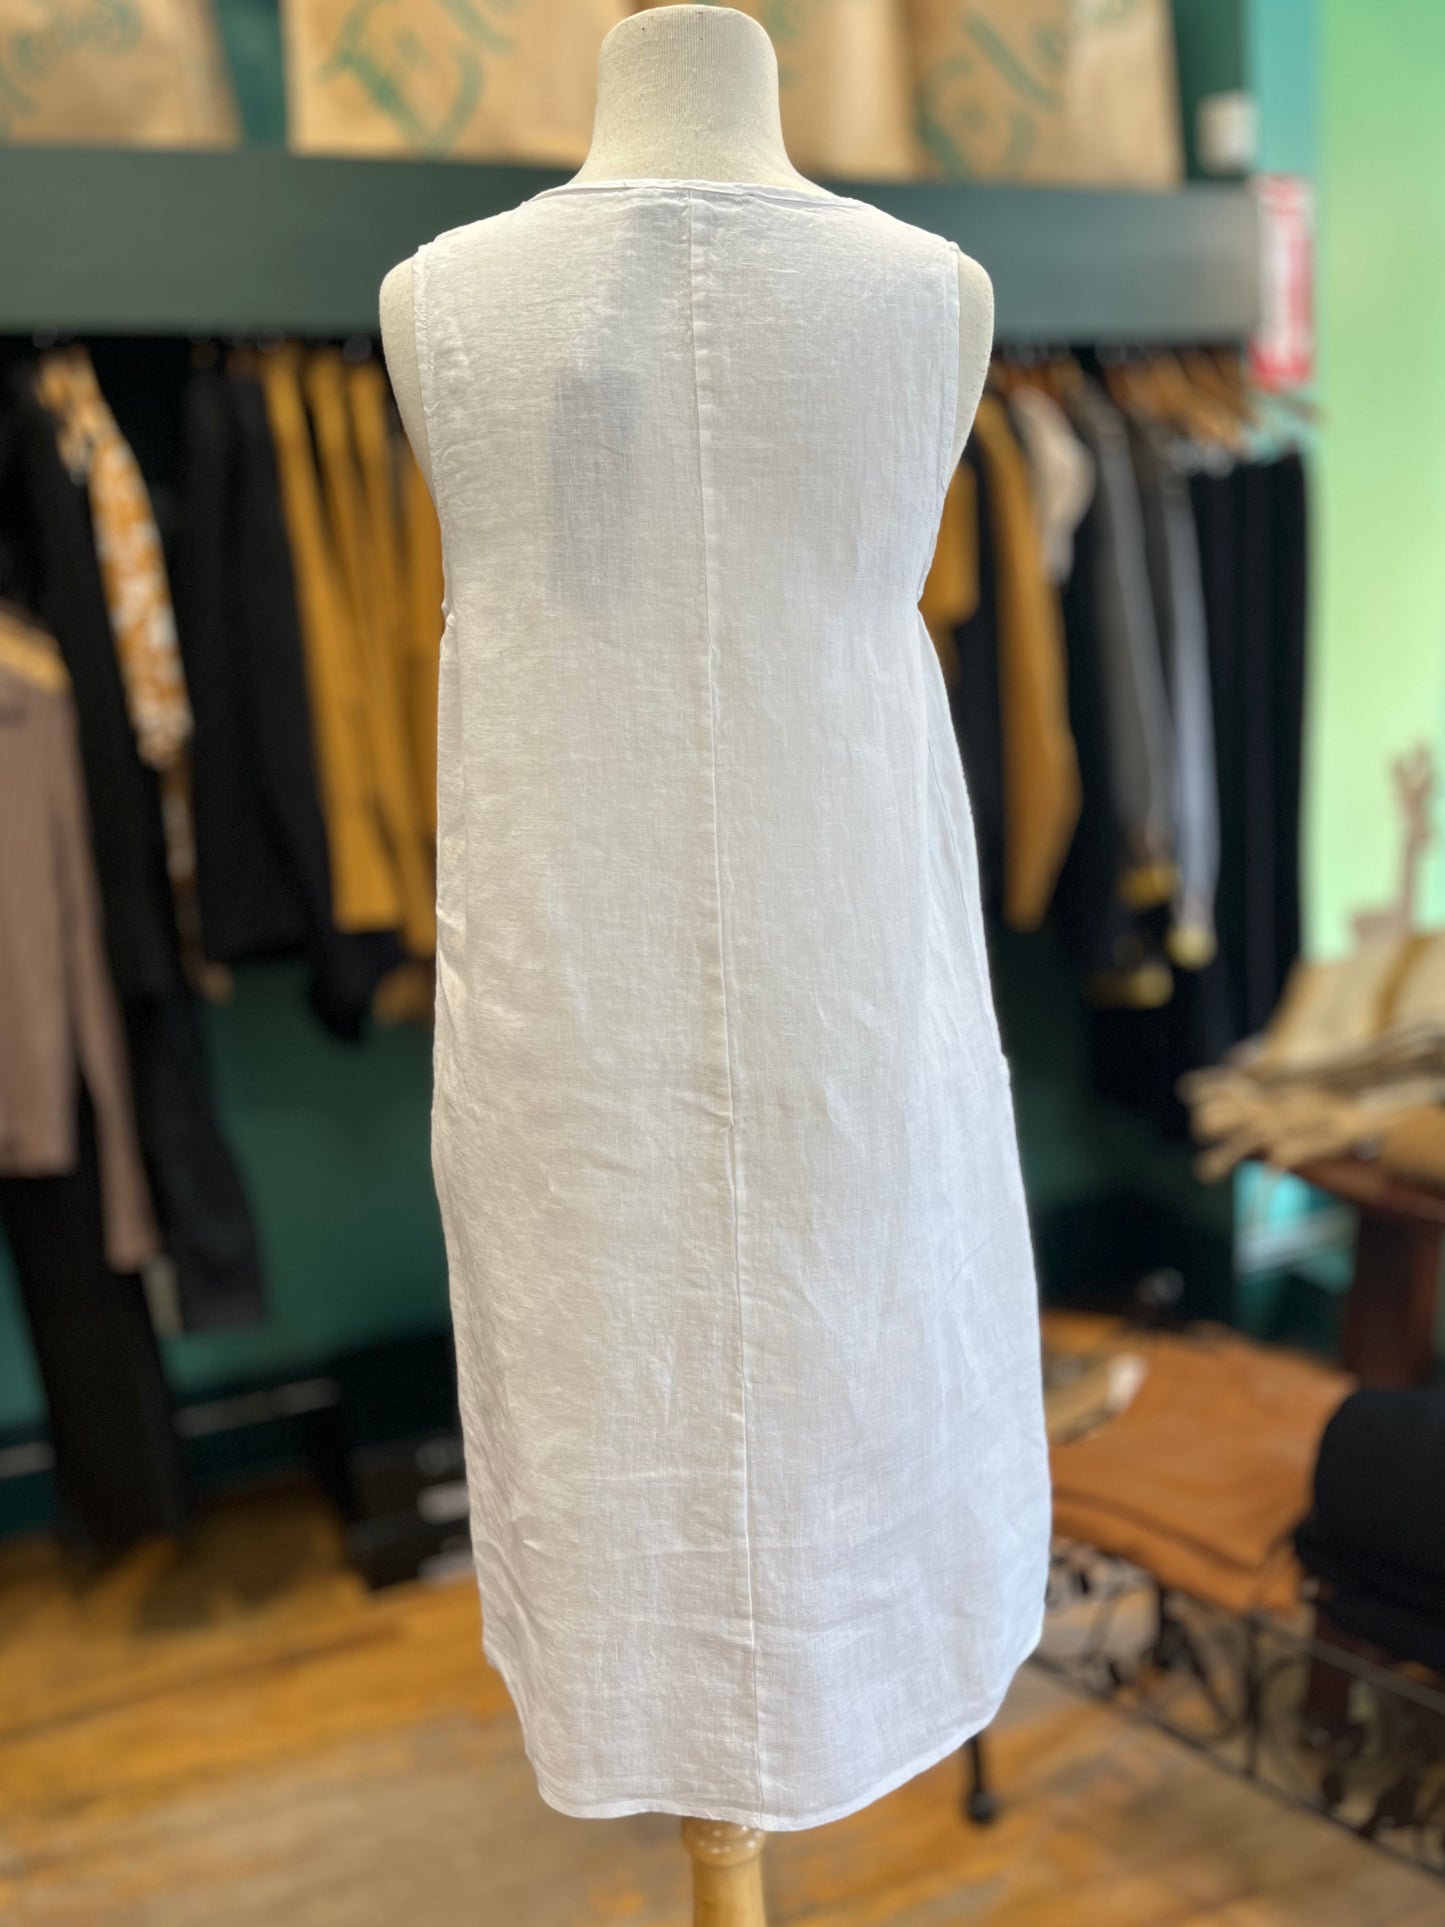 Sleeveless Linen Dress with Elastic Underarm by Pistache